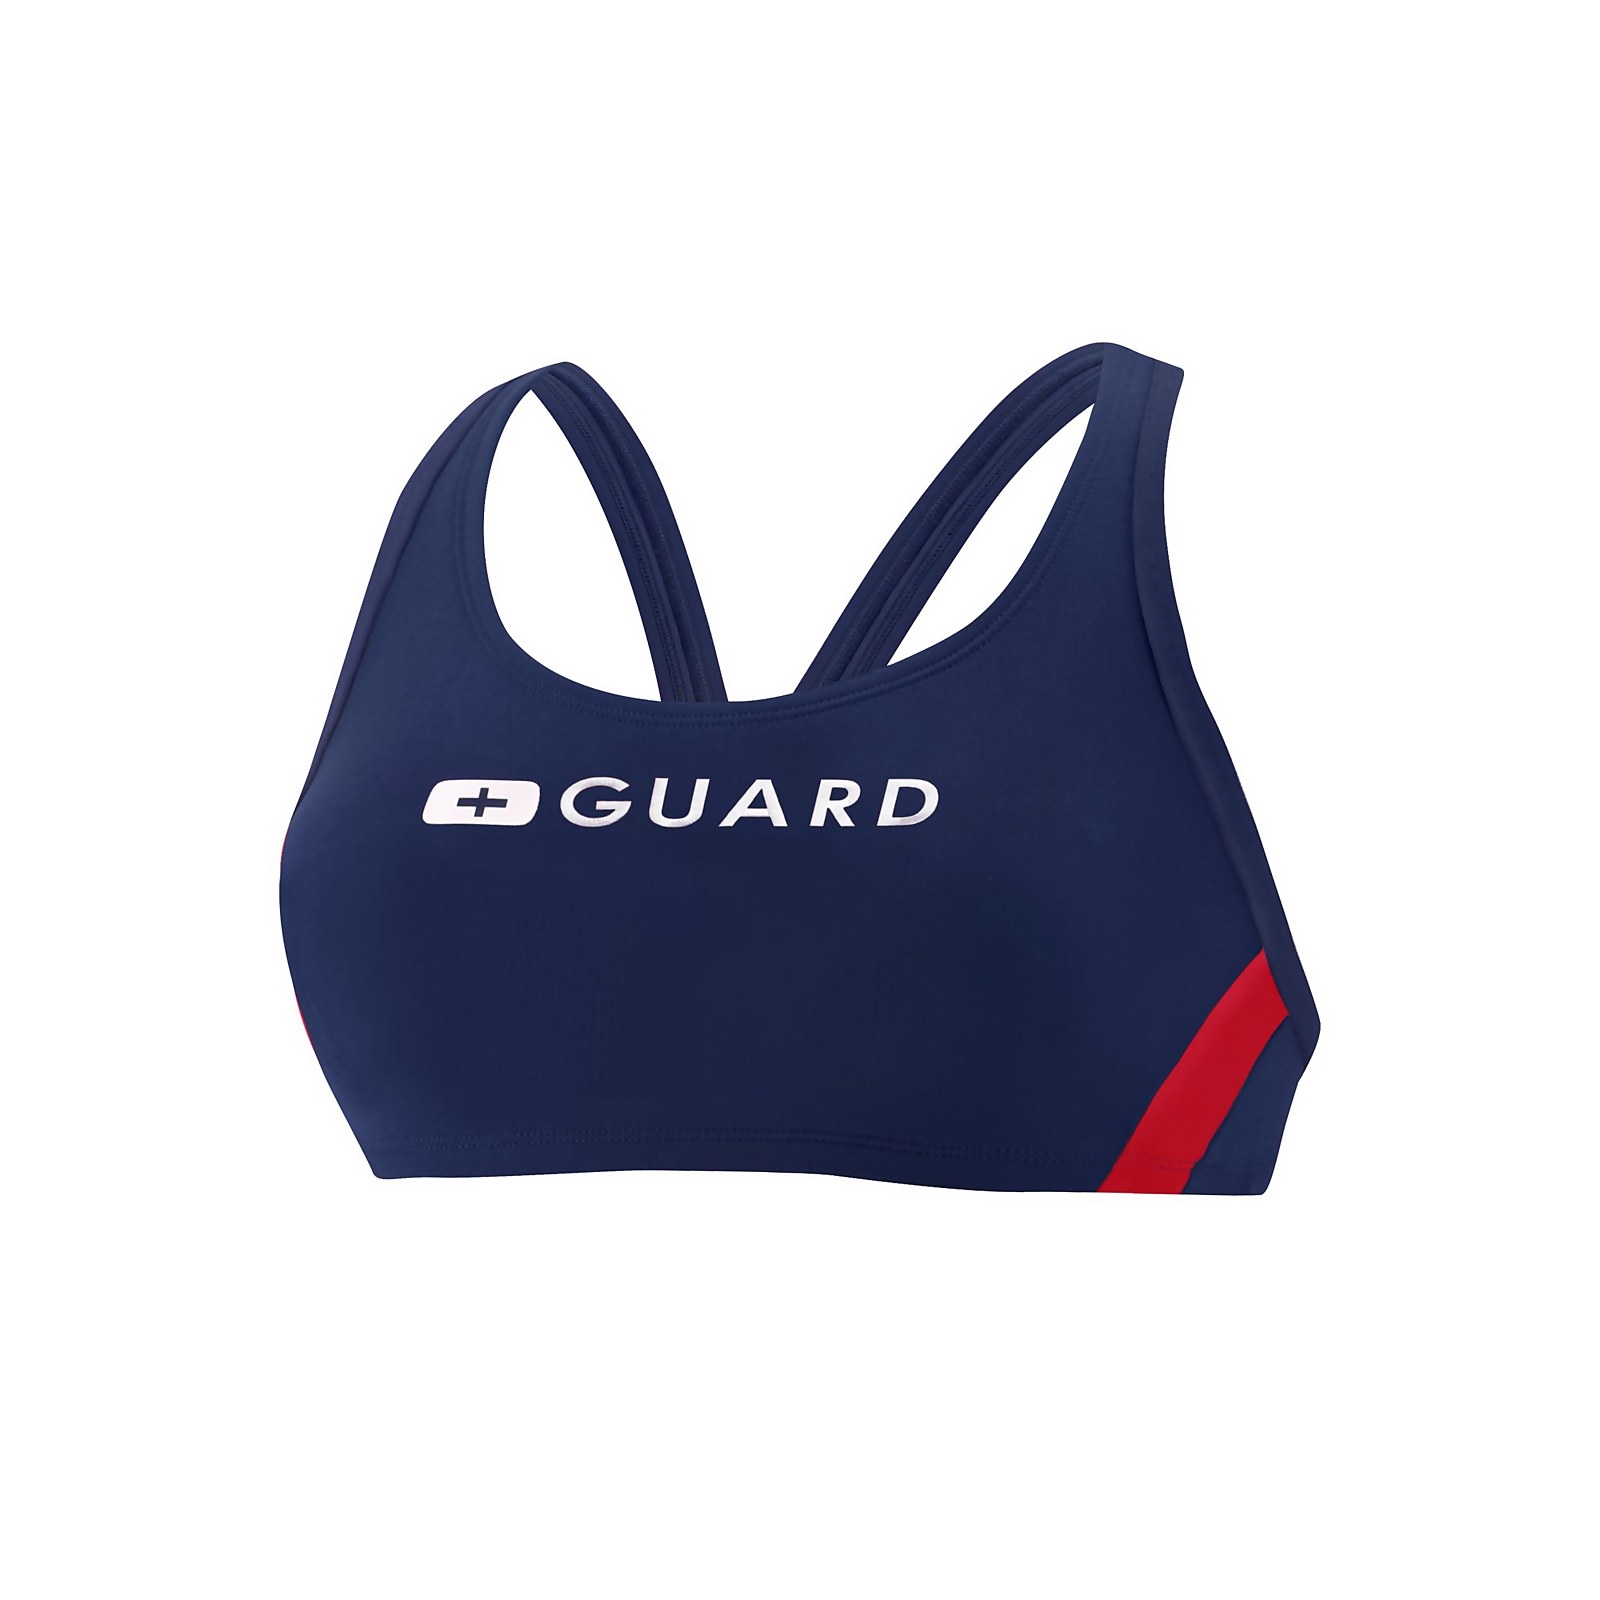 Speedo  Guard Sports Bra - M    : Navy